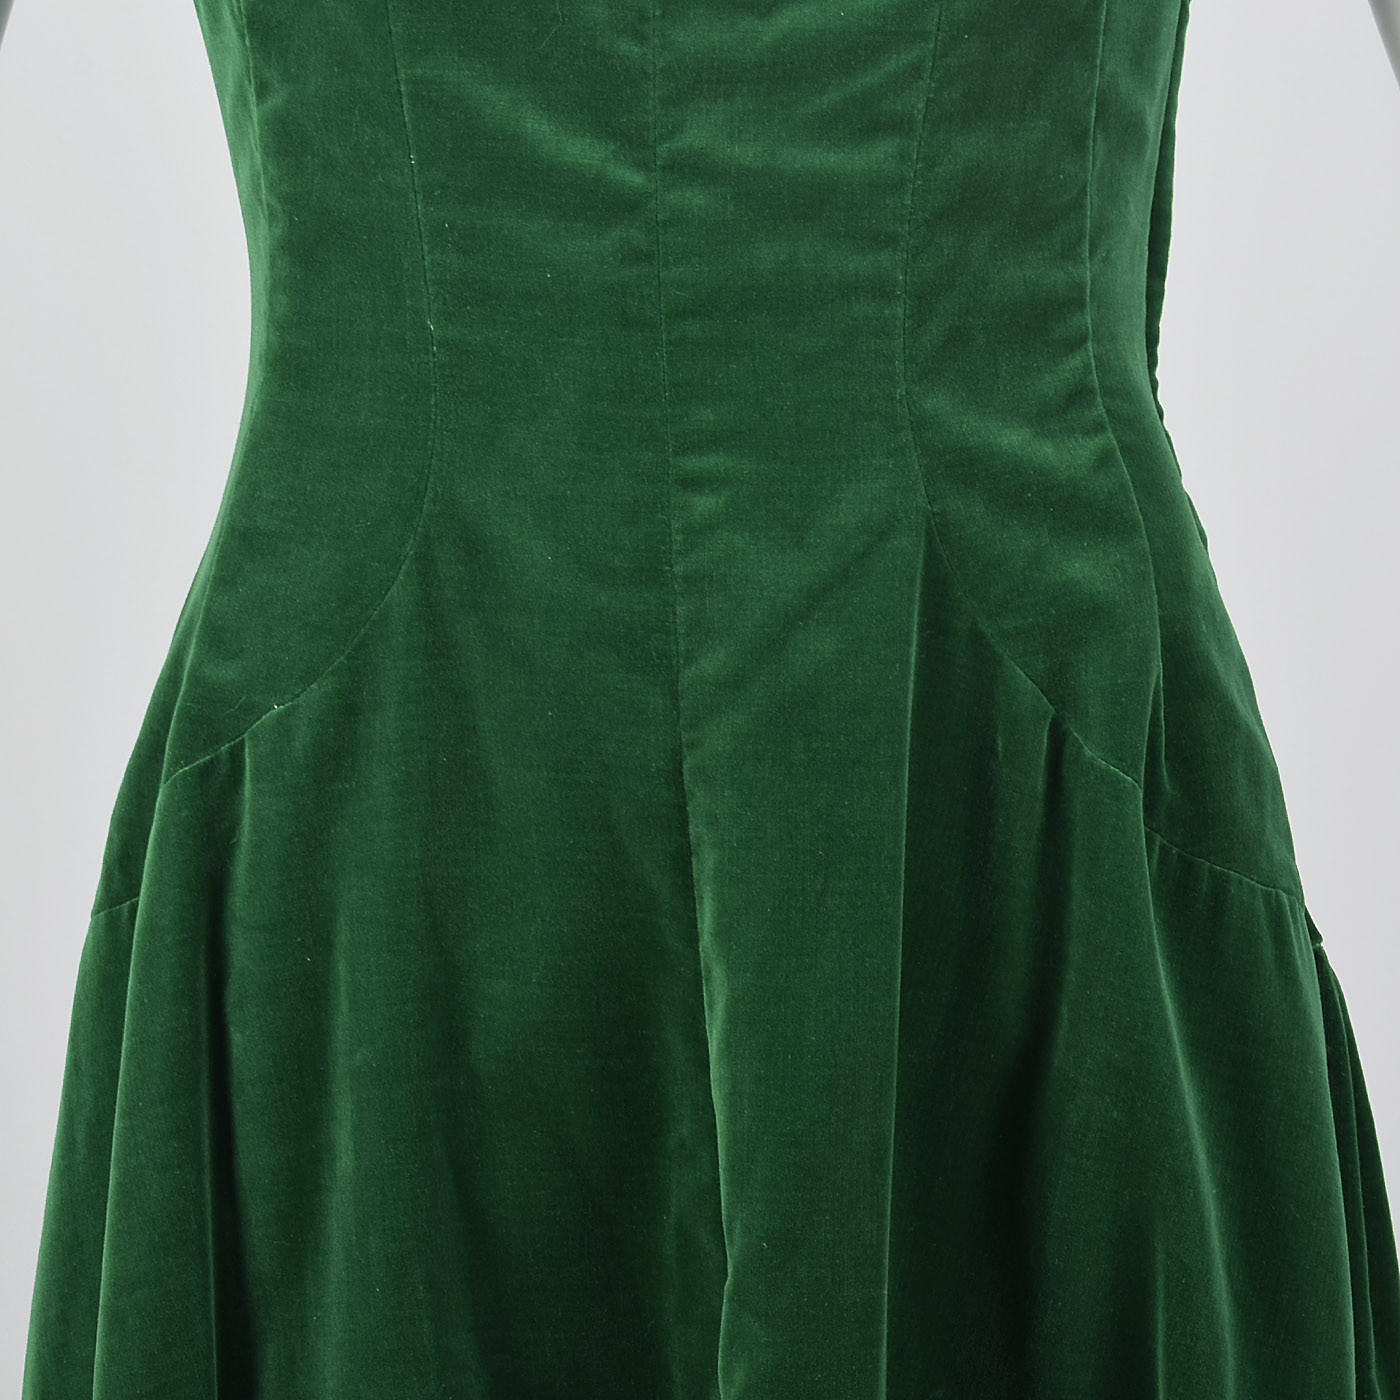 1950s Green Velvet Off Shoulder Party Dress